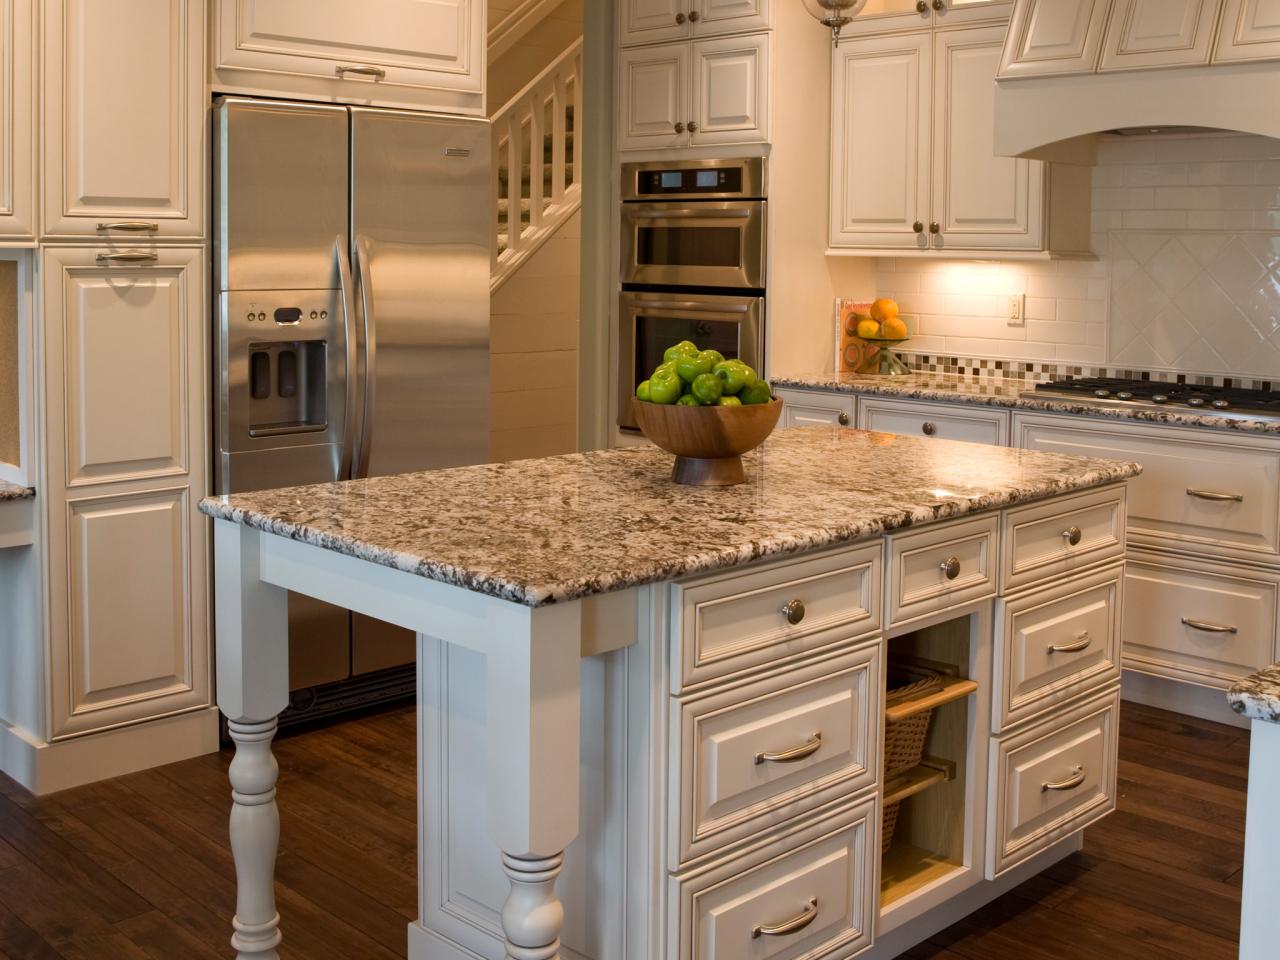 Home Design Architecture Cost Of New Kitchen Countertops